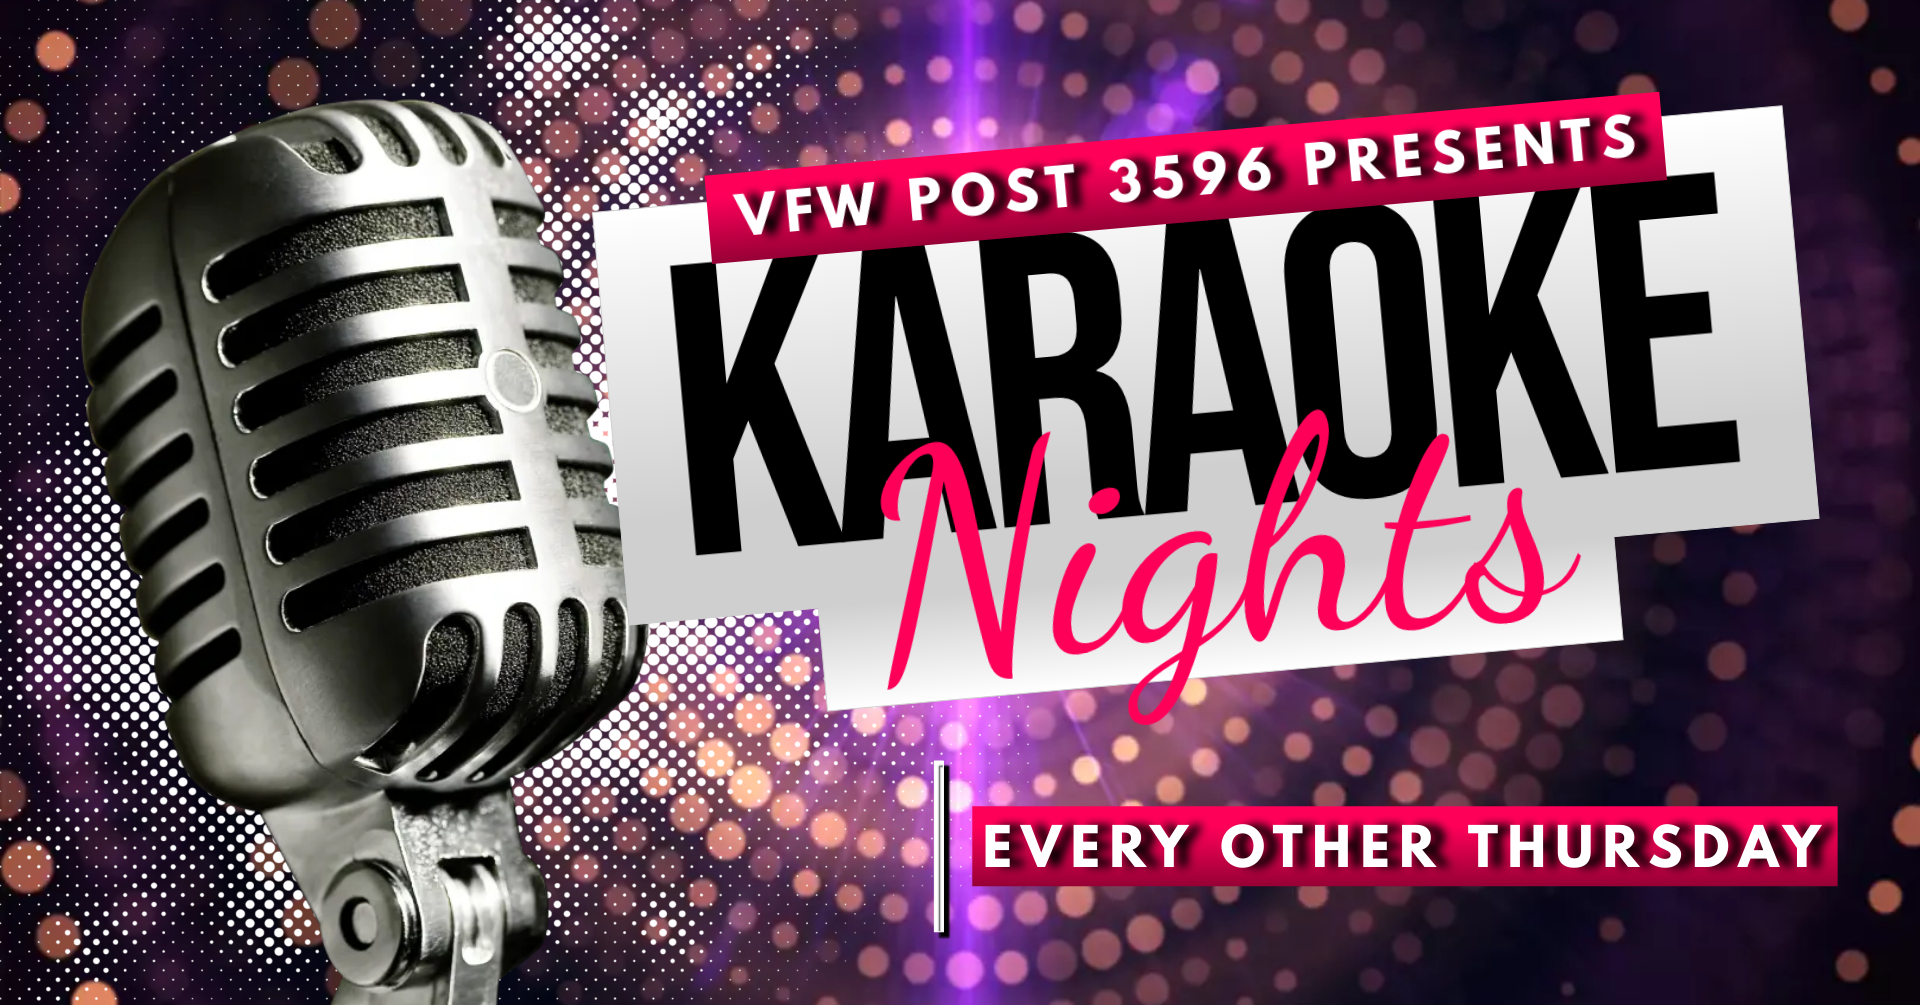 Karaoke Night at Plains, Montana VFW Post 3596 every other Thursday